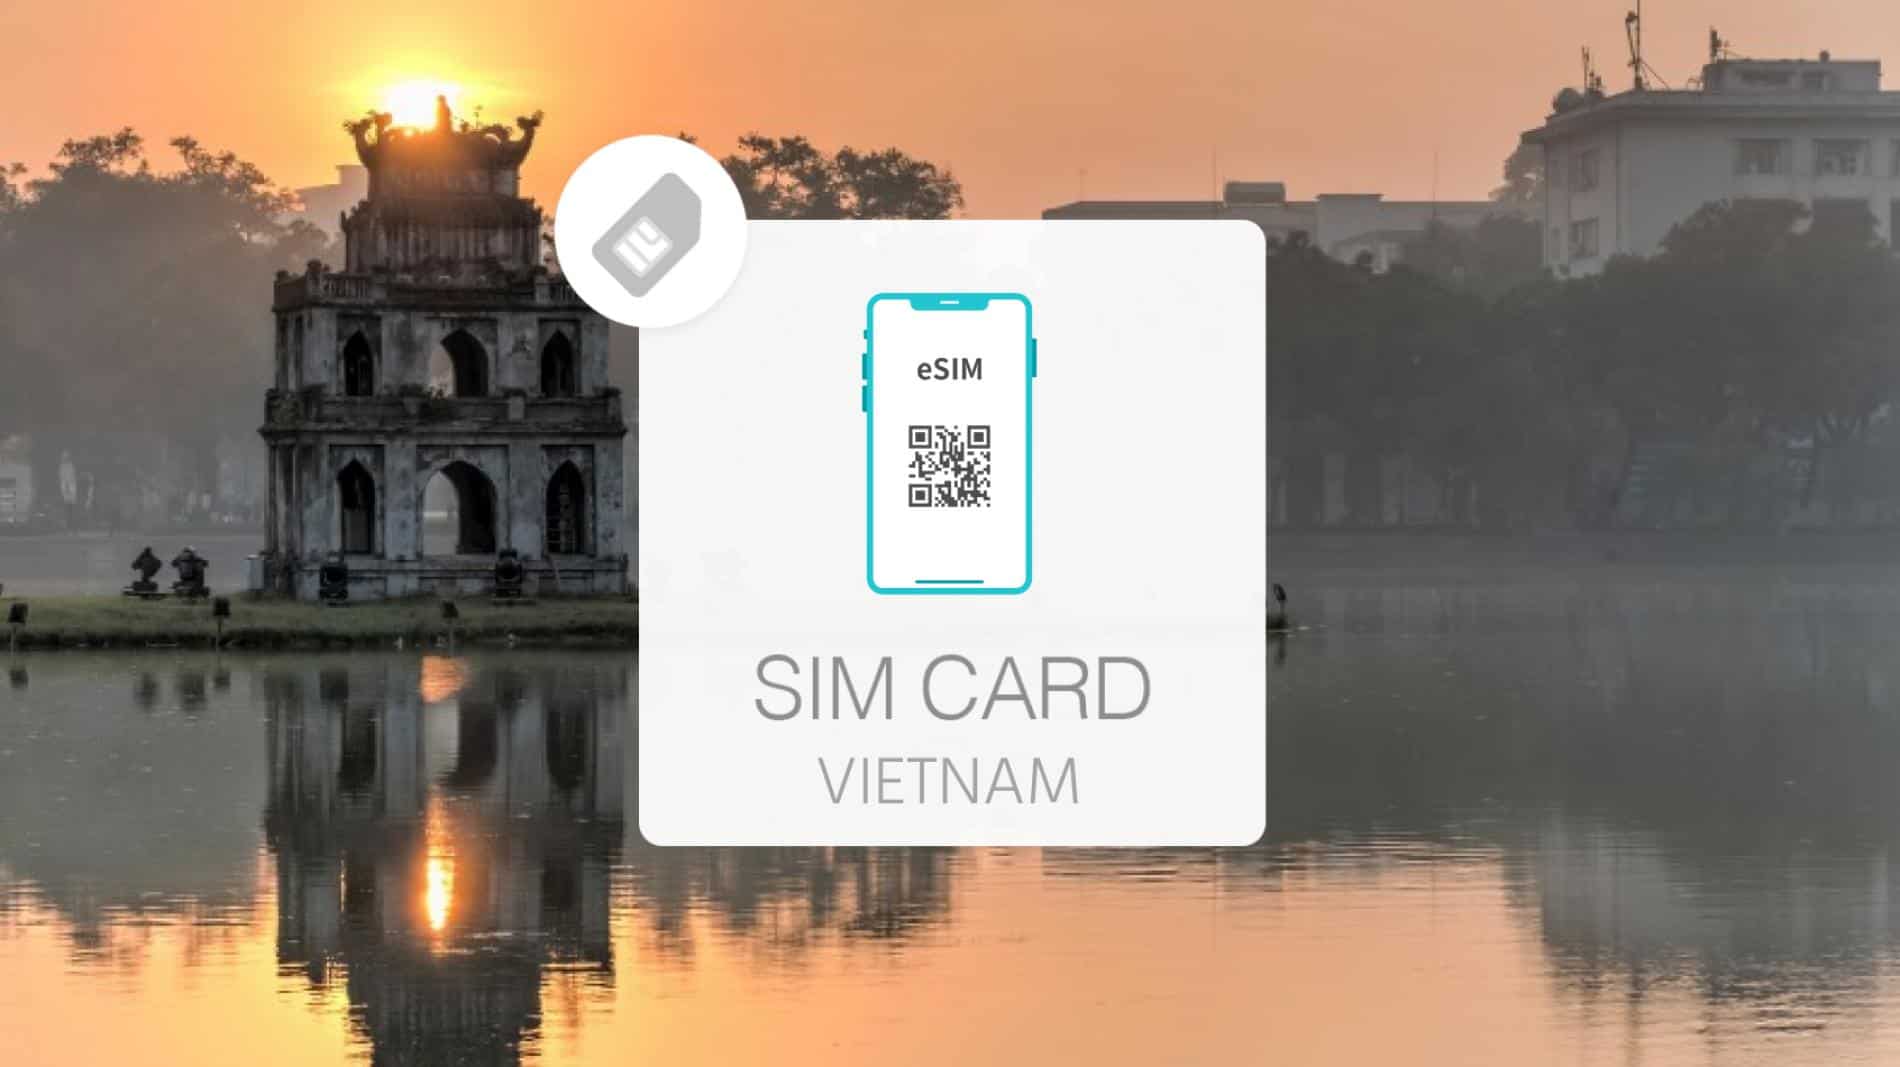 Vietnam esim – Internet freedom for travelers to Vietnam